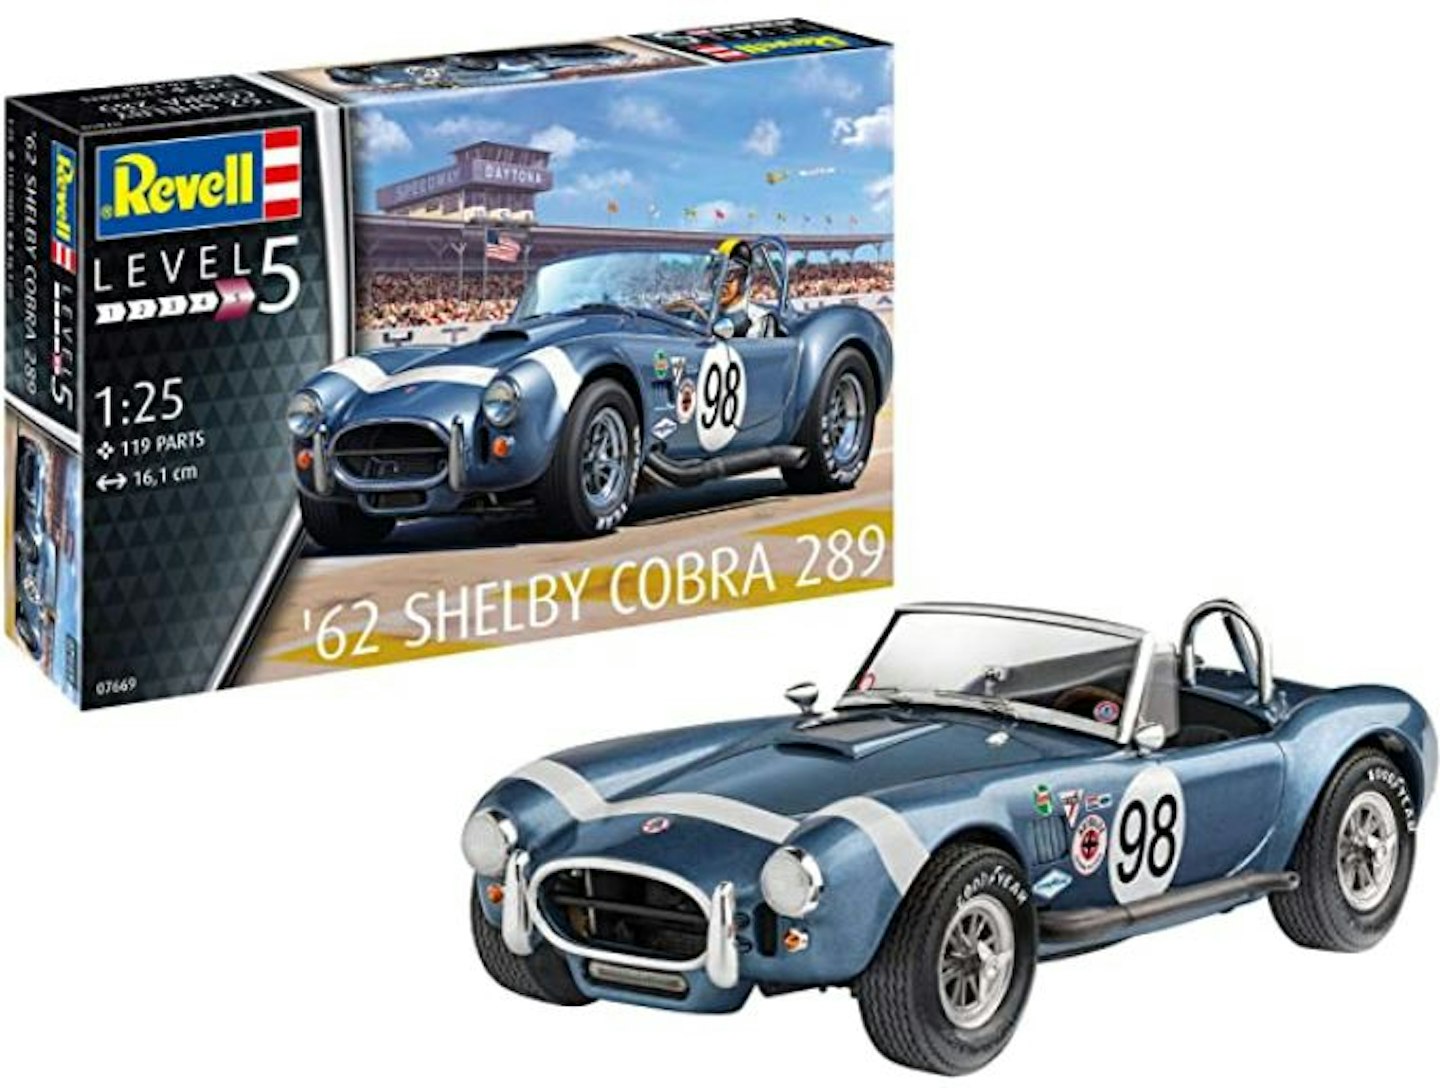 '62 Shelby Cobra 289